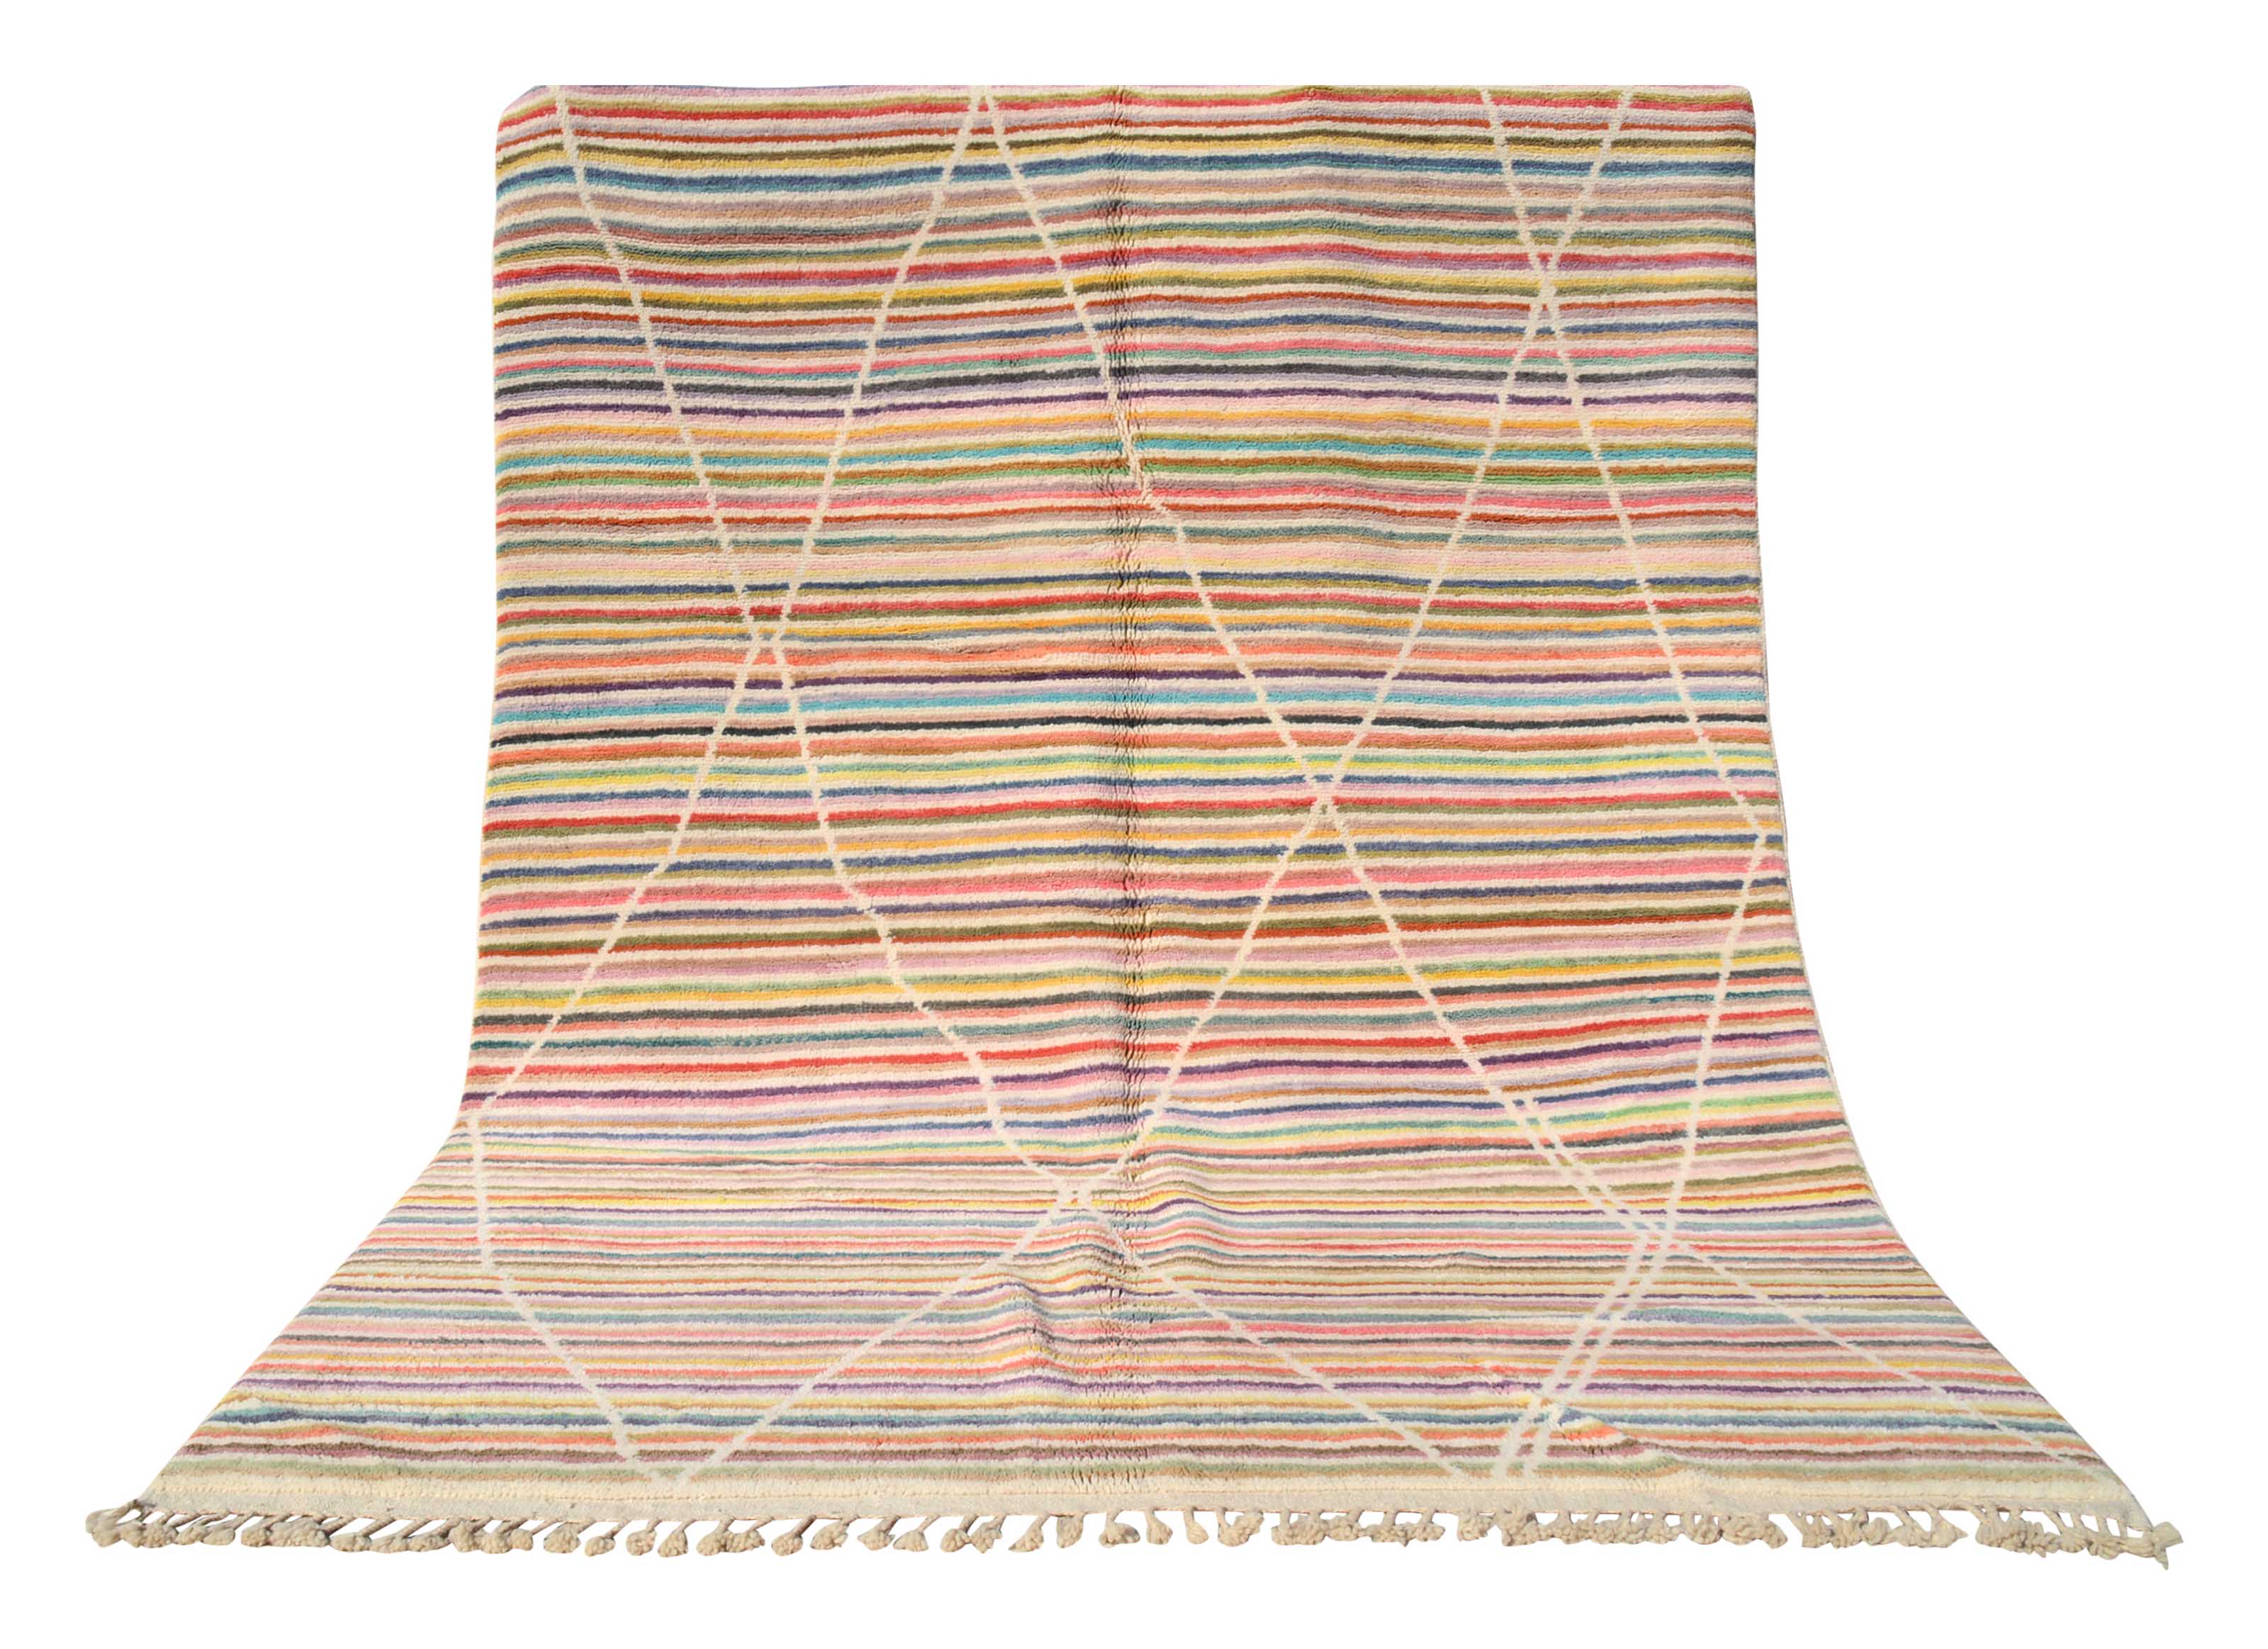 Beni Strokes - Contemporary Elegance in Handmade Moroccan Rugs